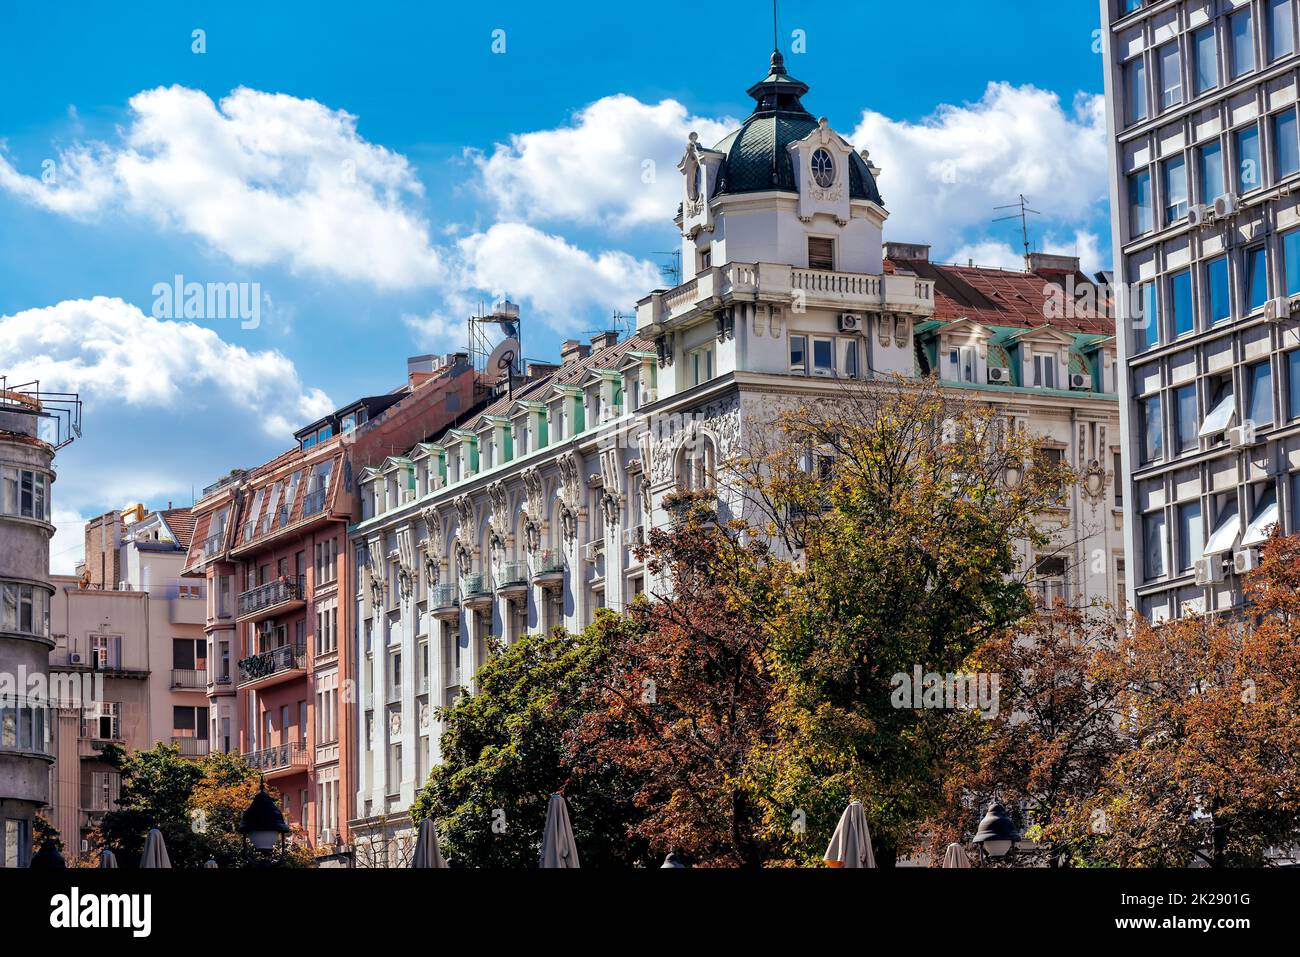 Baroque style building at (Kneza Mihaila or Knez Mihailova) street. Belgrade, Serbia Stock Photo